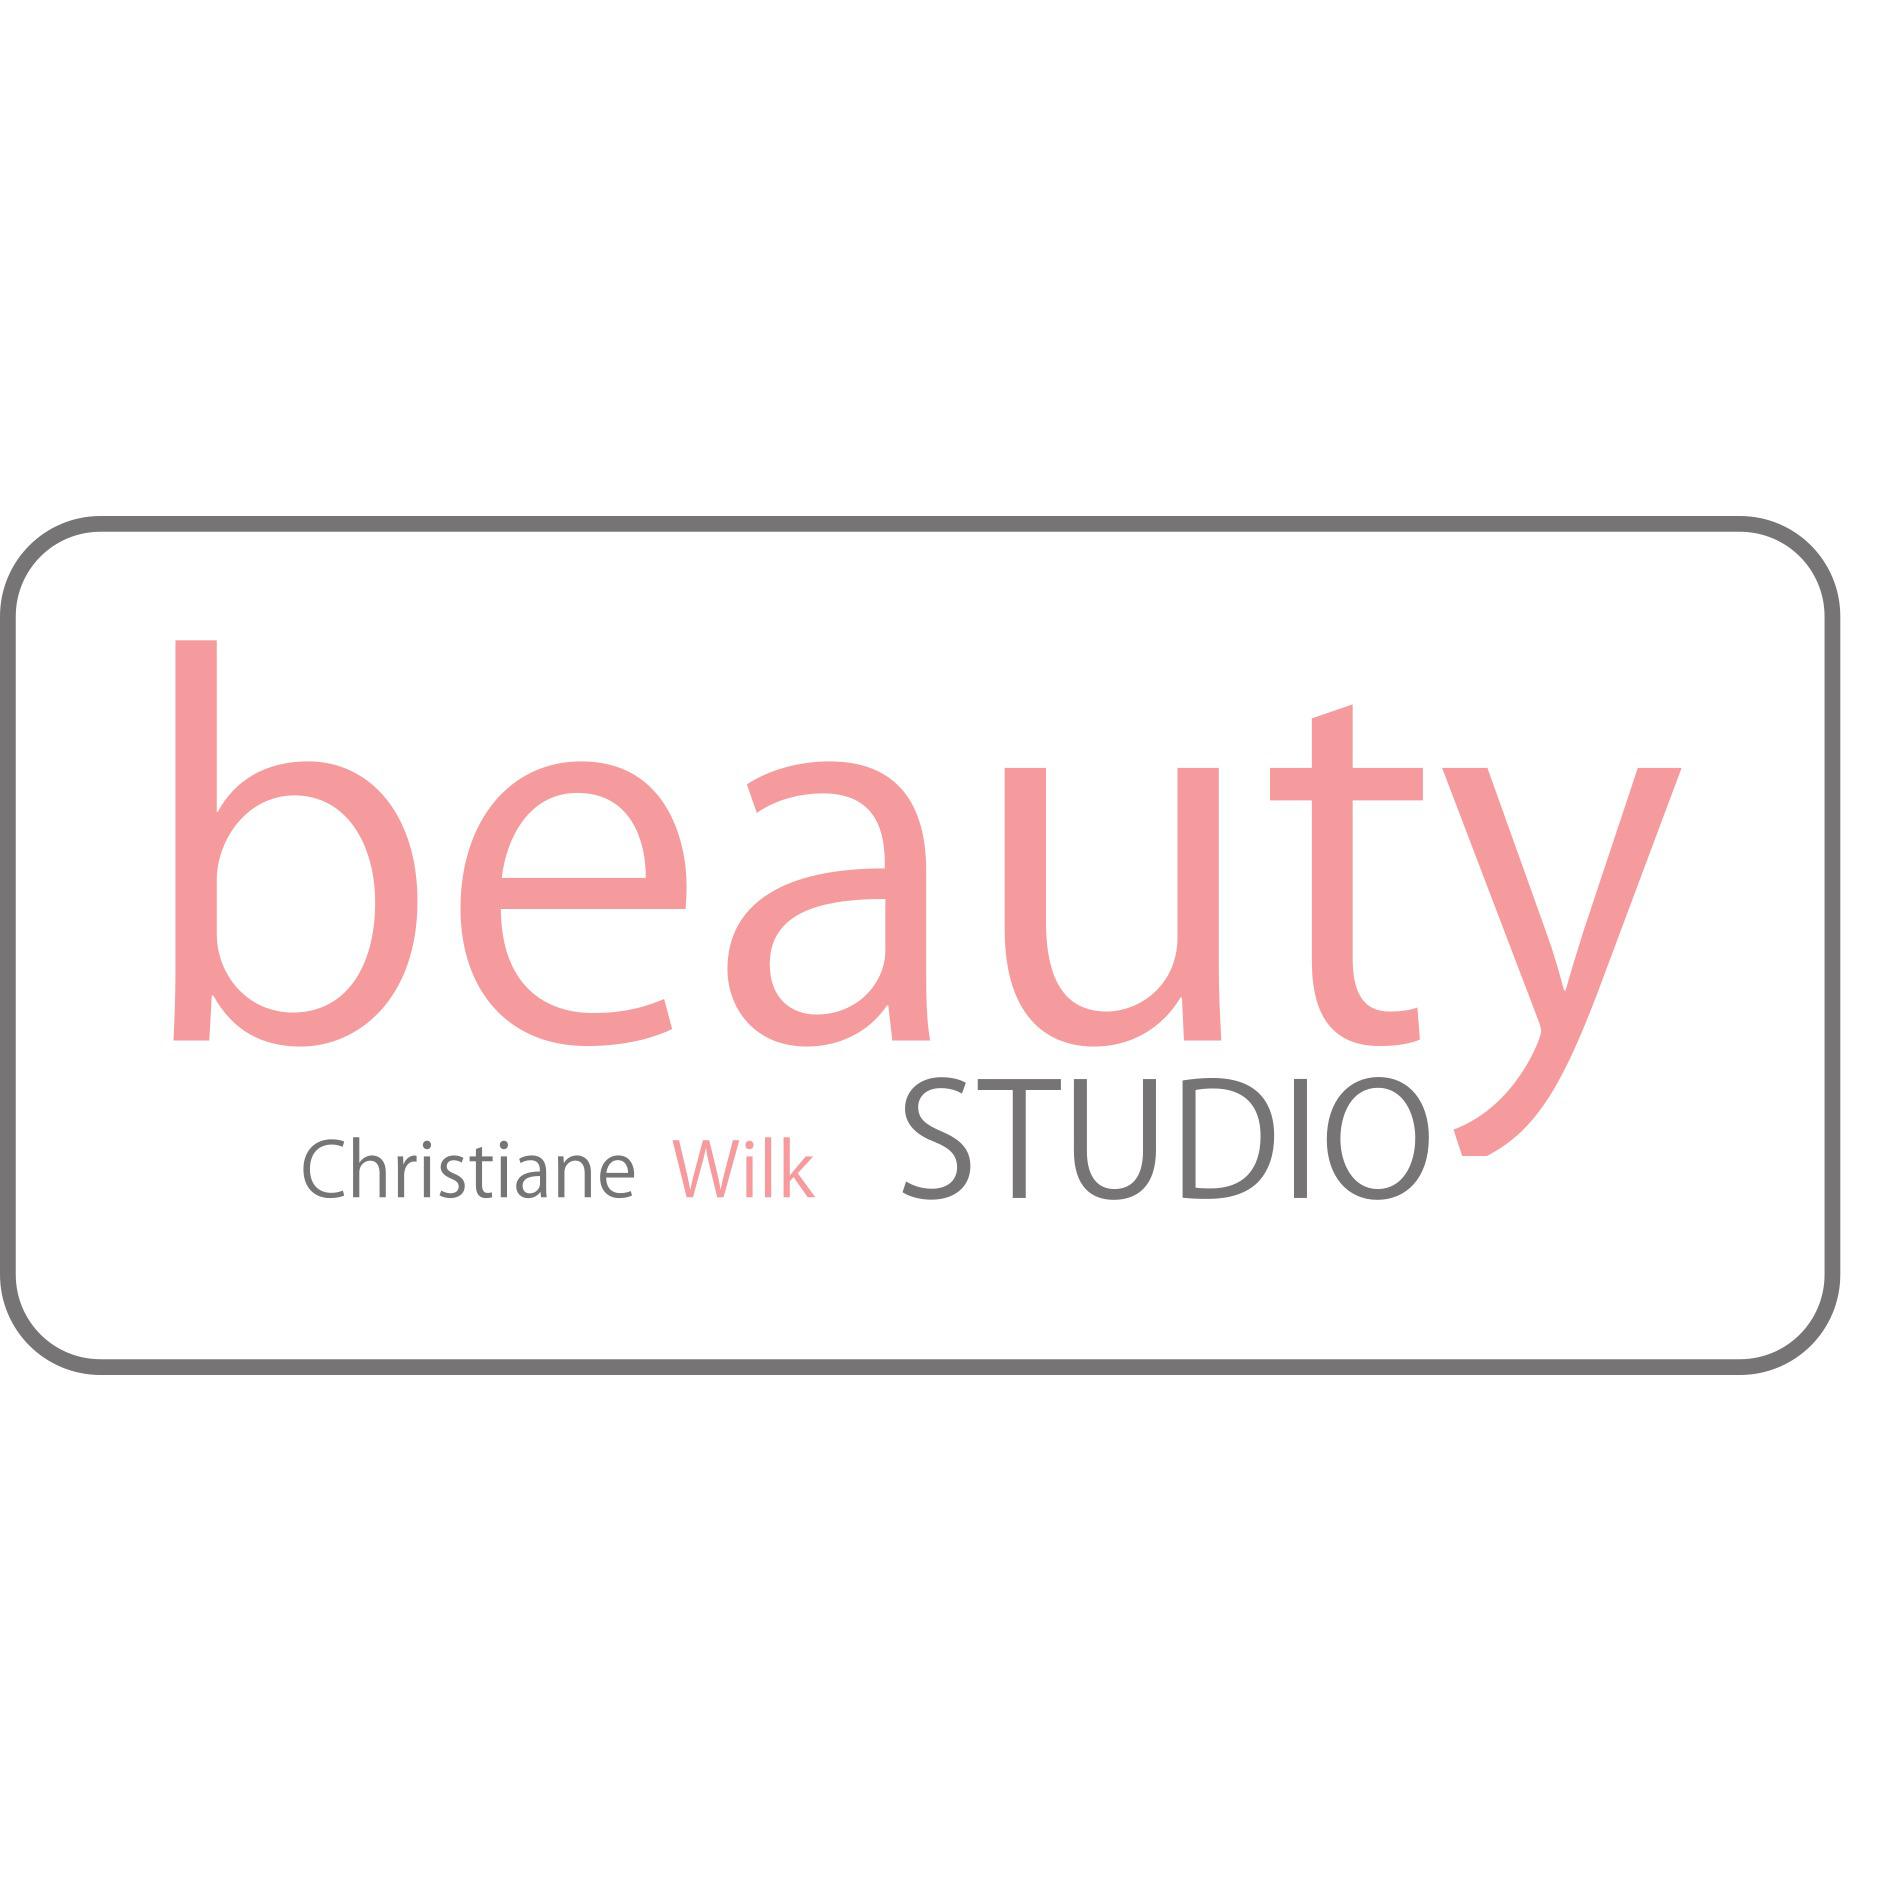 Beauty Studio Christiane Wilk  